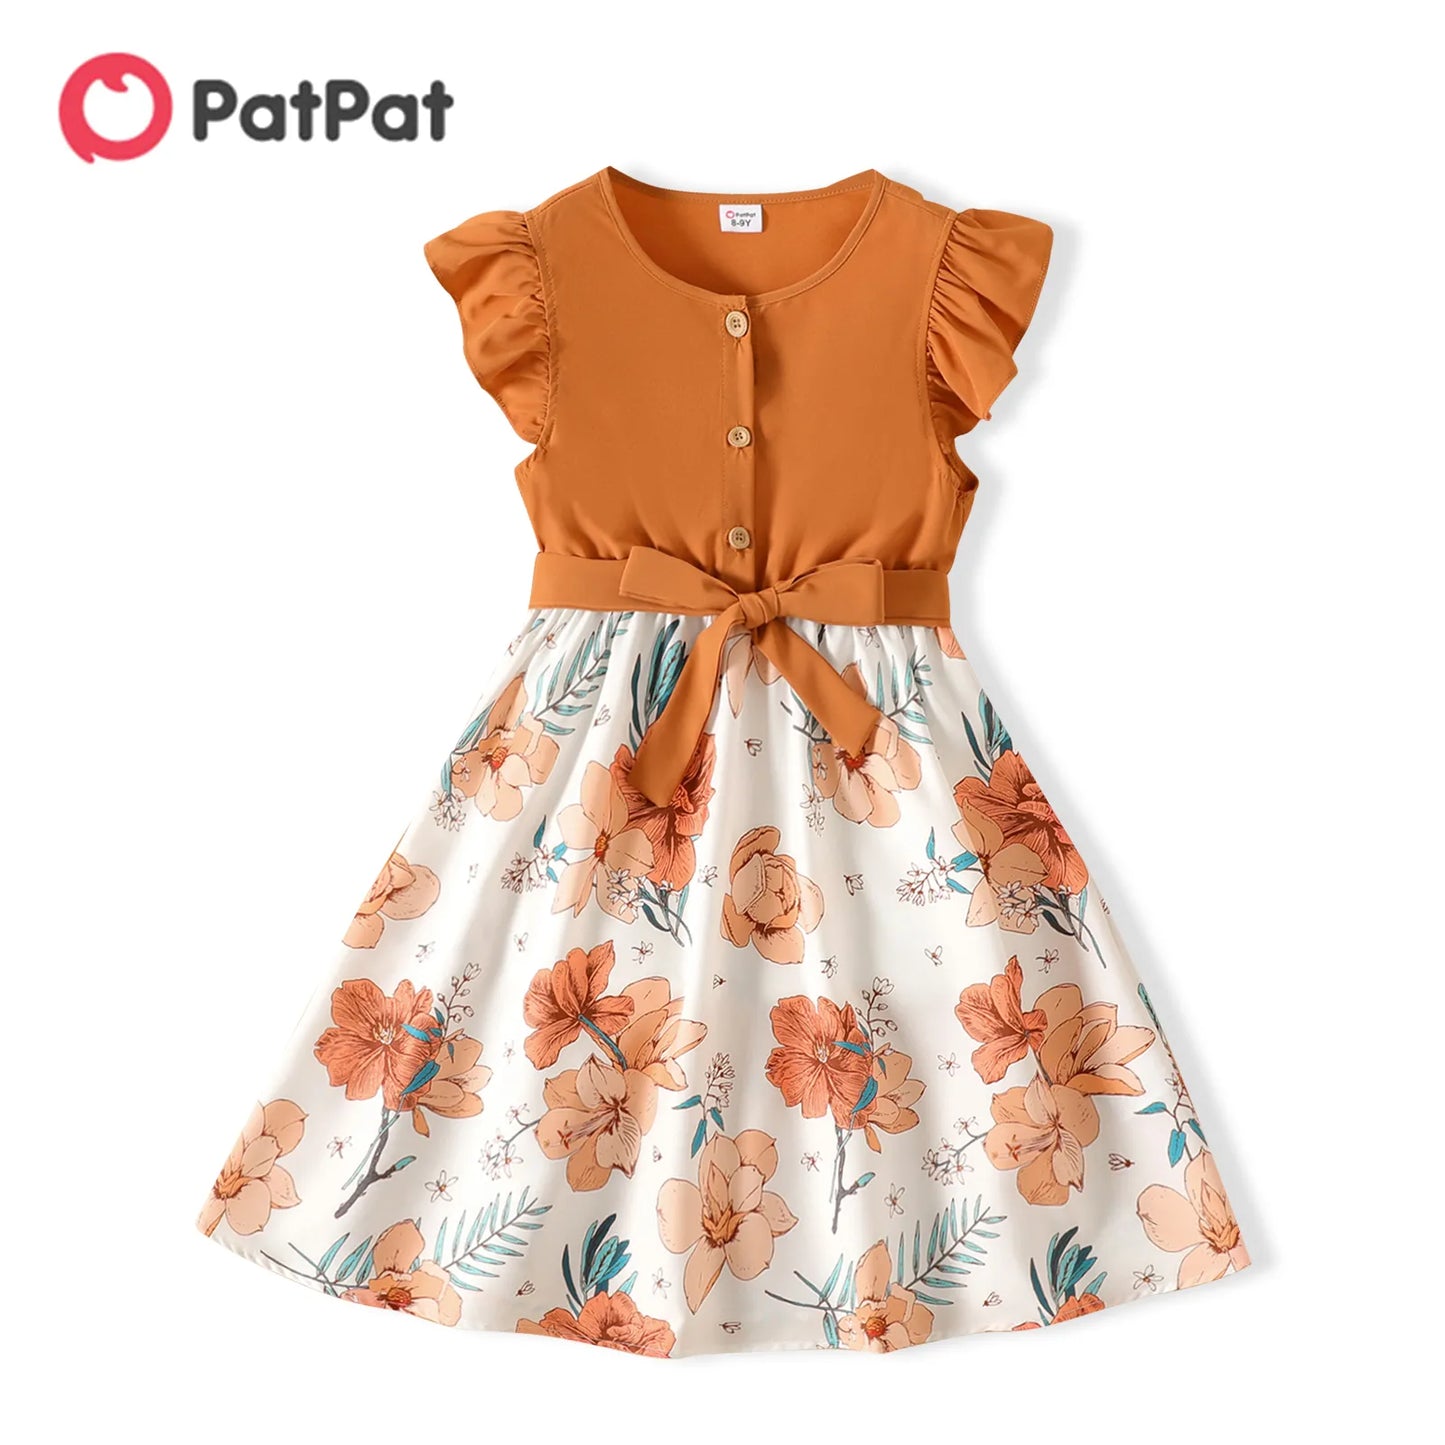 PatPat Girl Kids Dress